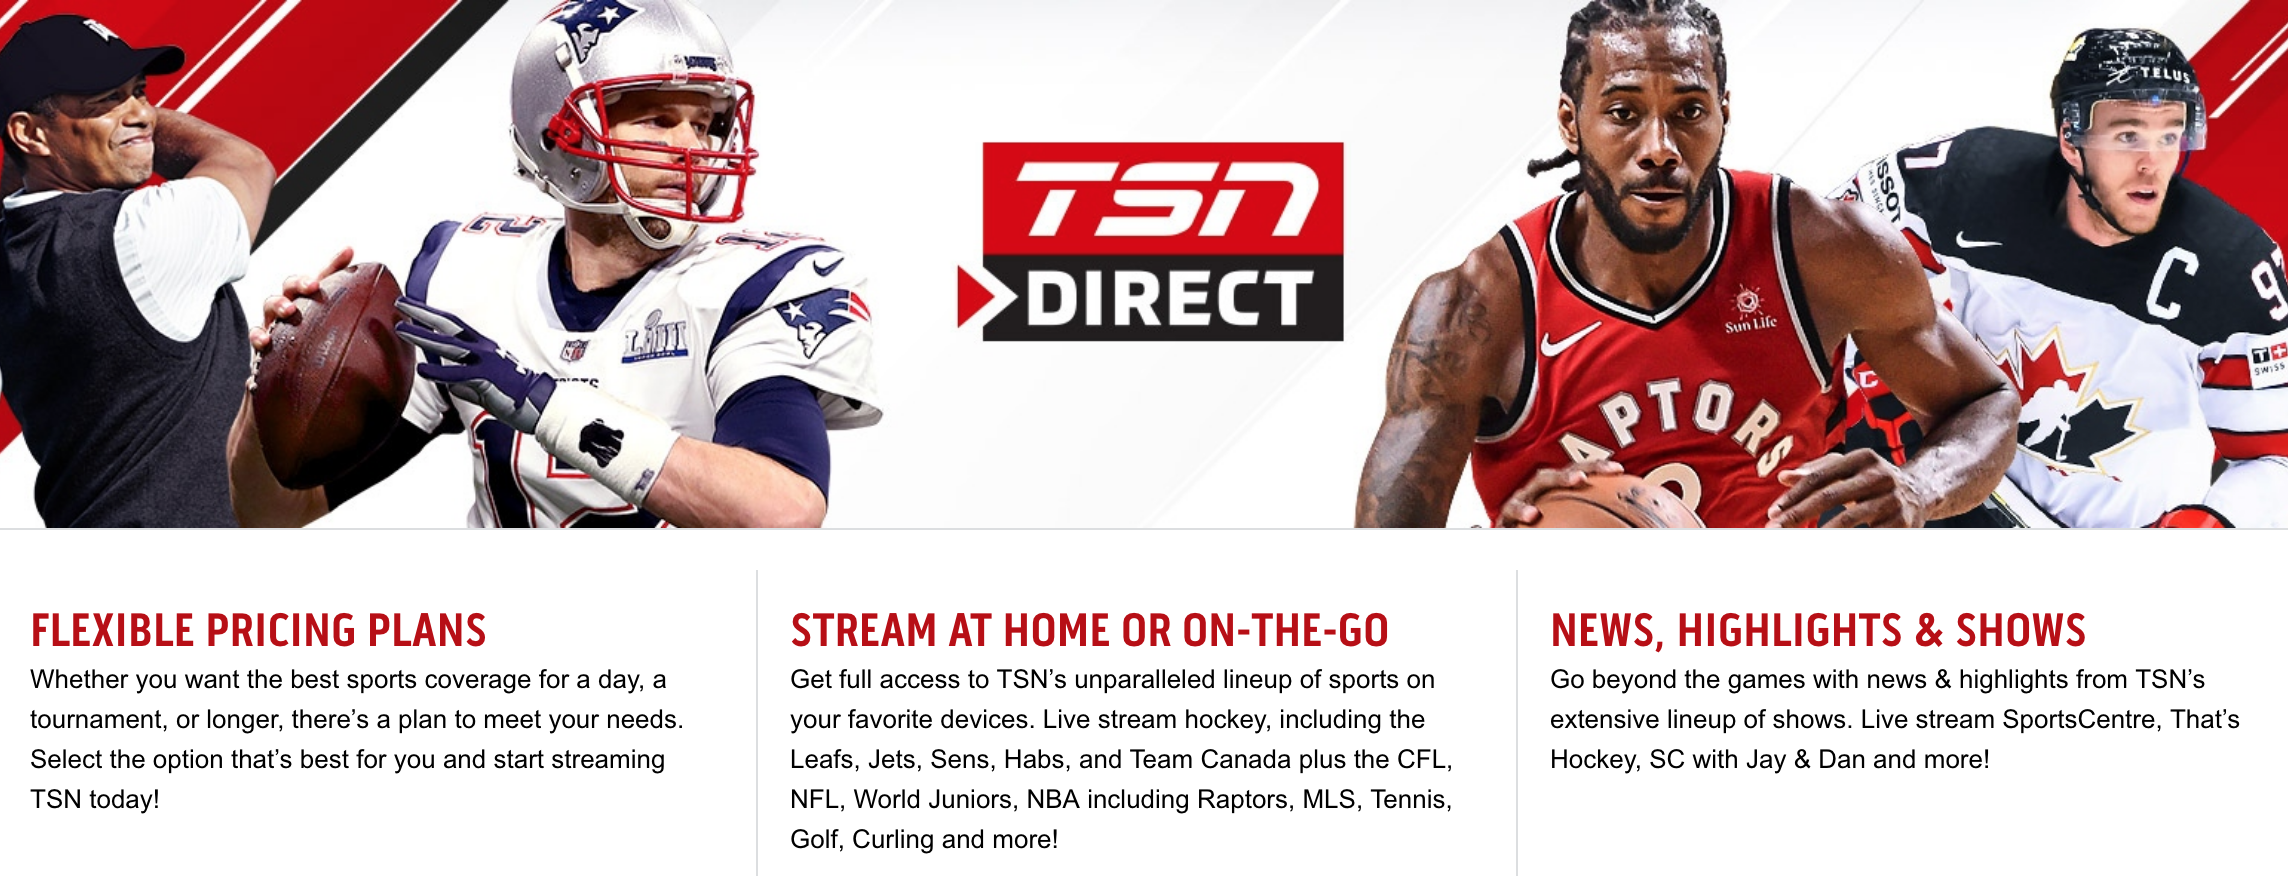 Heres how to stream the Raptors vs Warriors NBA finals in Canada